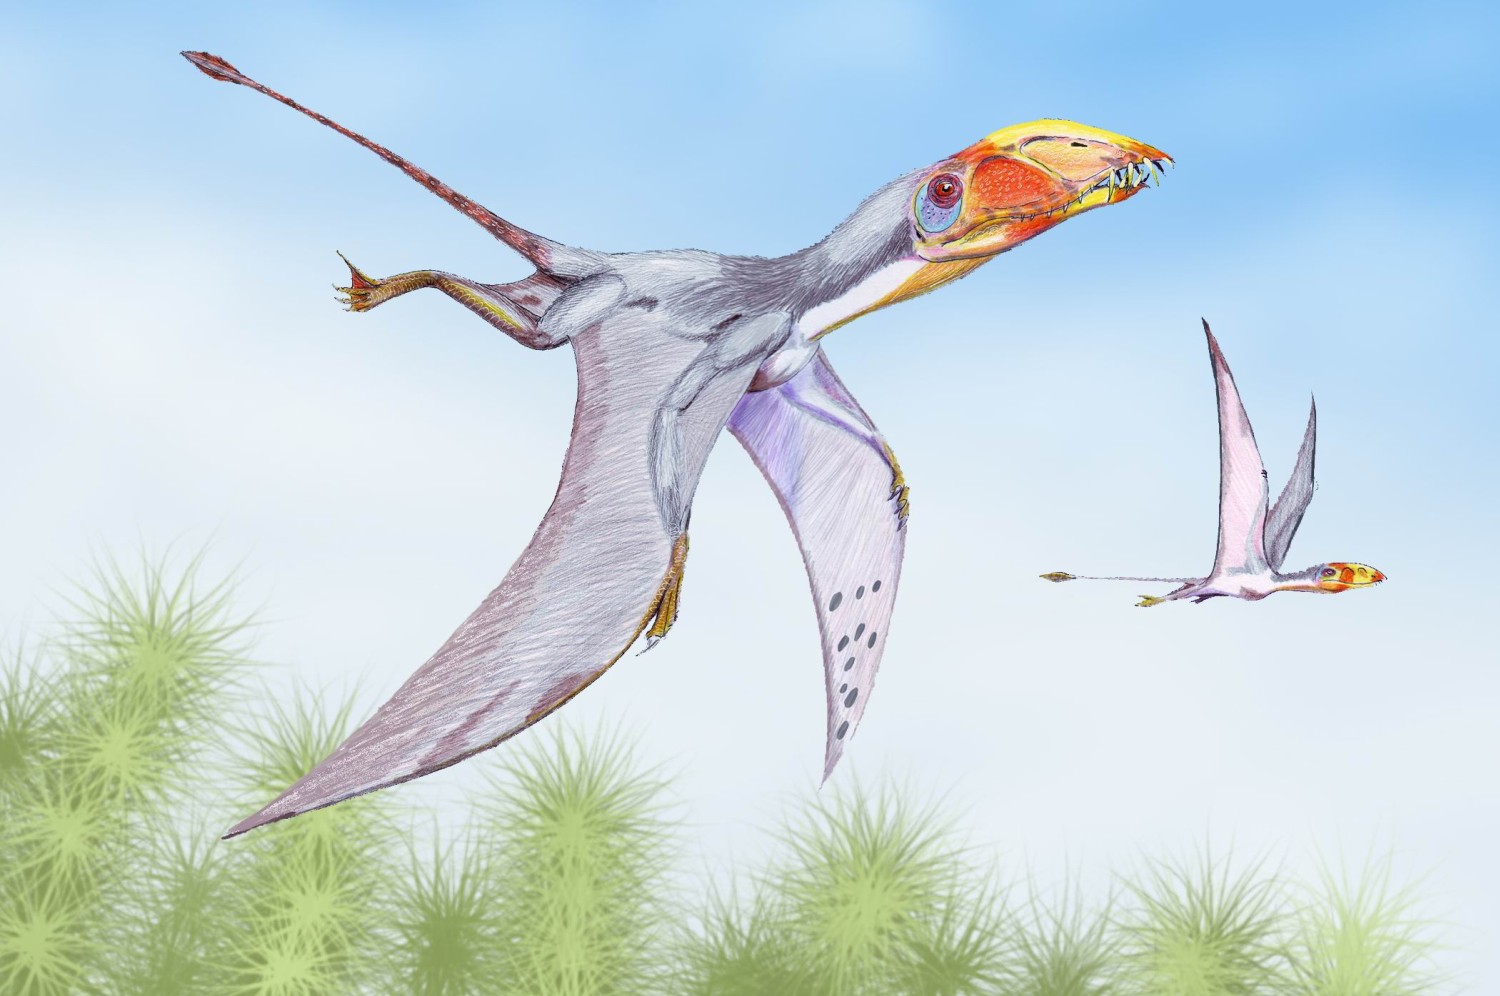 Dimorphodon macronyx